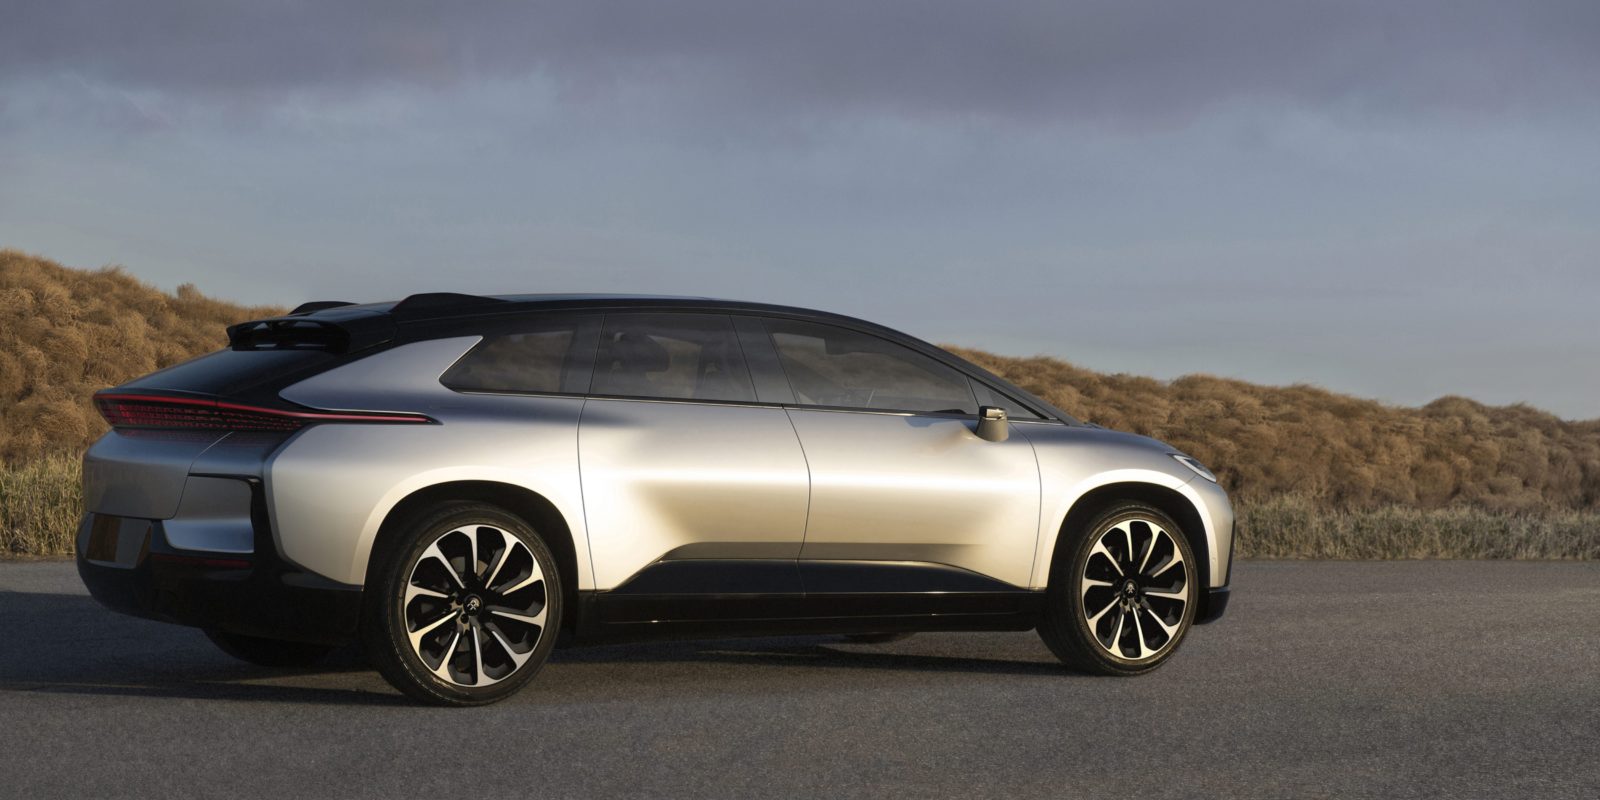 Faraday Future reveals the “FF 91”: 1050hp, 378mi EPA range, 200kW charging, self-driving; 2018 production intent